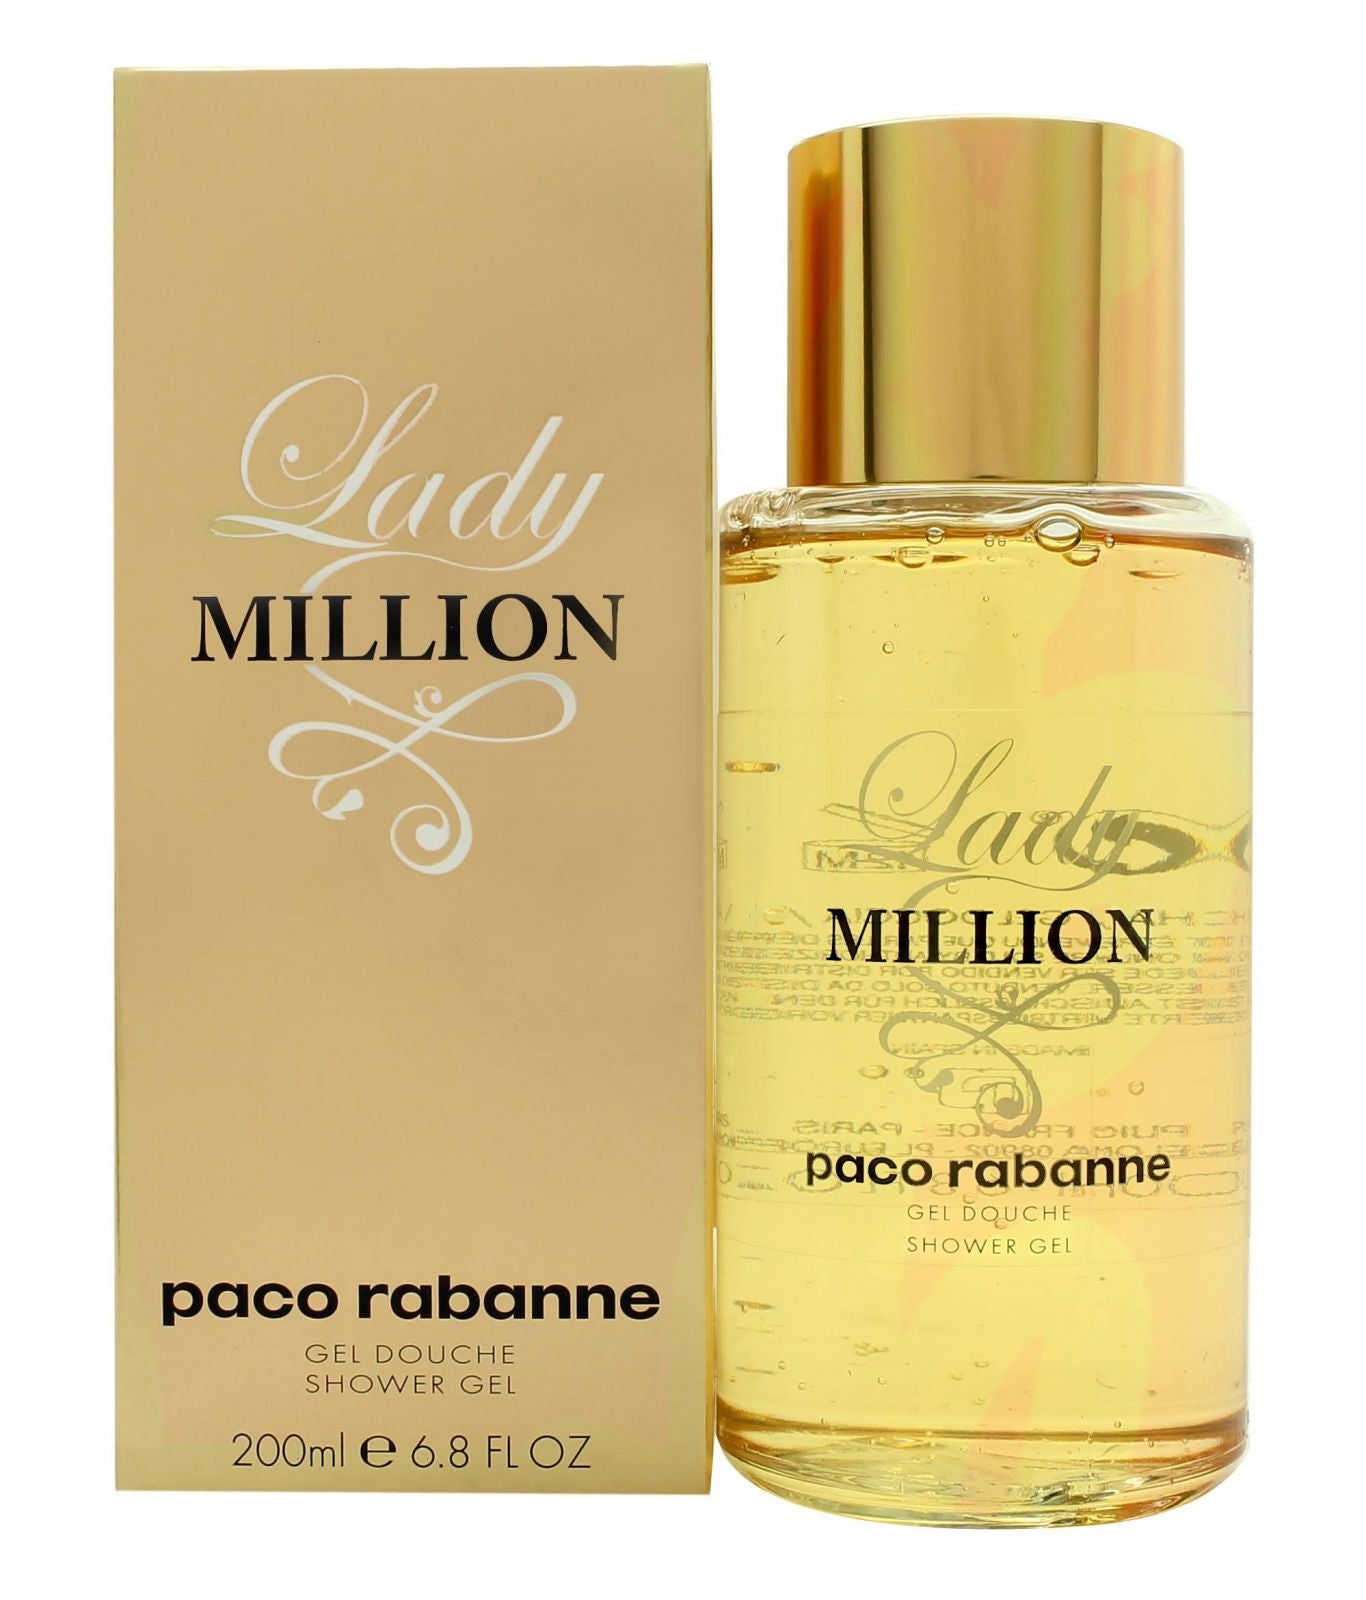 PACO RABANNE LADY MILLION GEL DOUCHE 200 ML - RossoLaccaStore